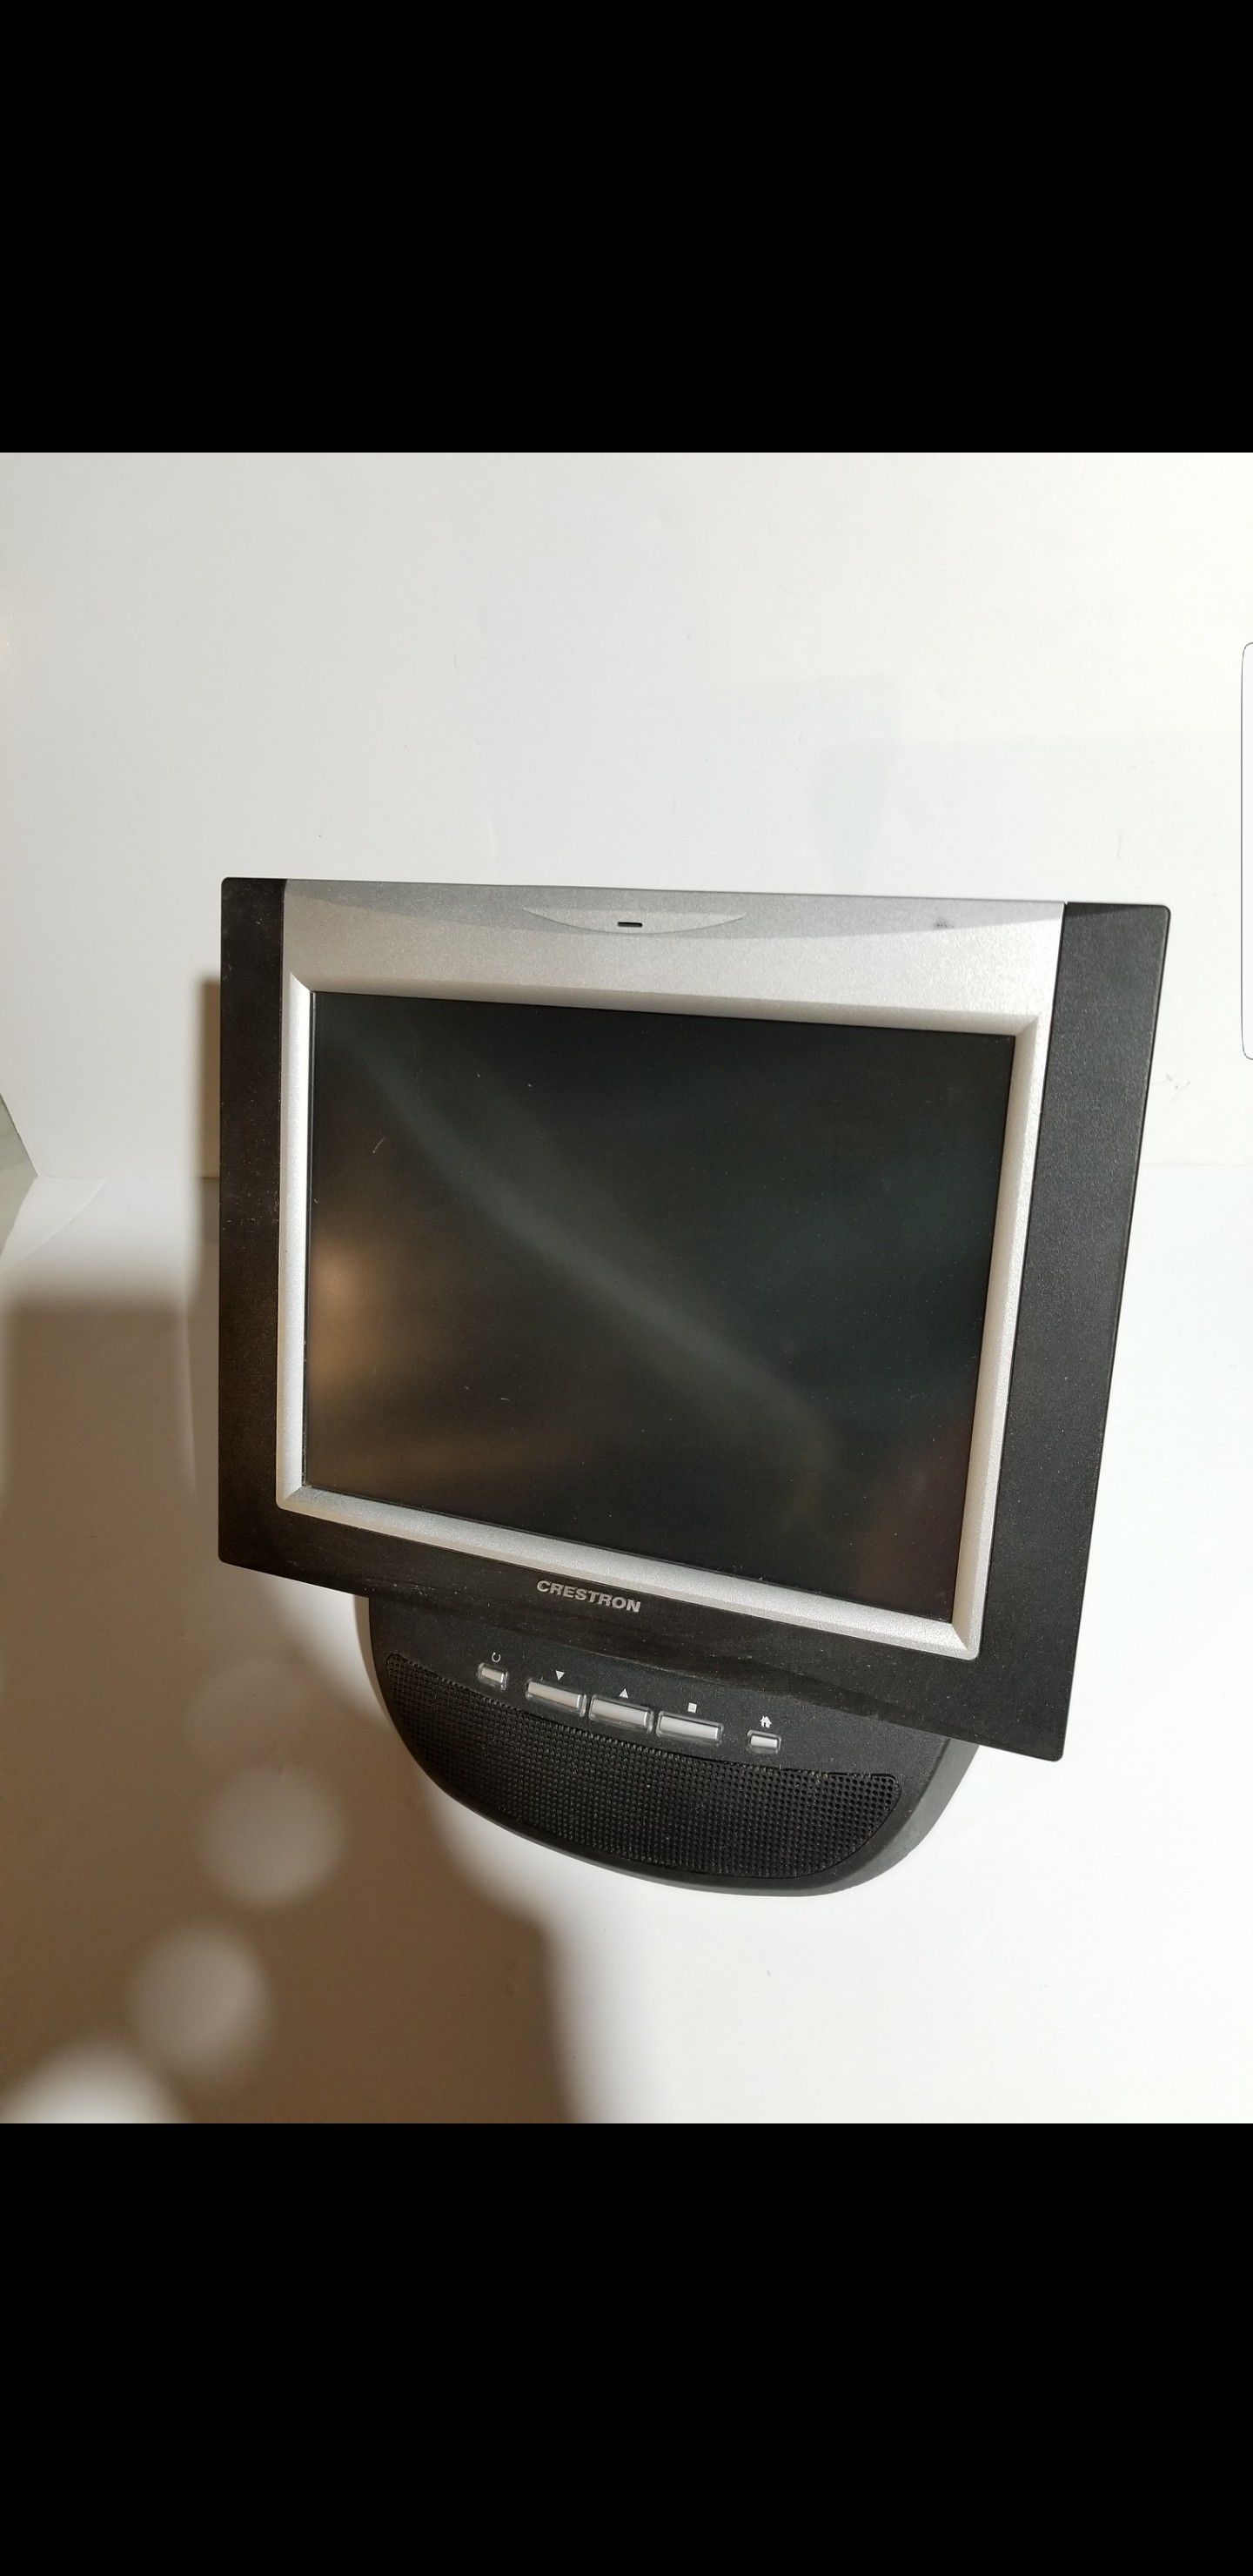 Crestron TPS-12 Active Matrix Touchscreen Home Automation Control Panel Display